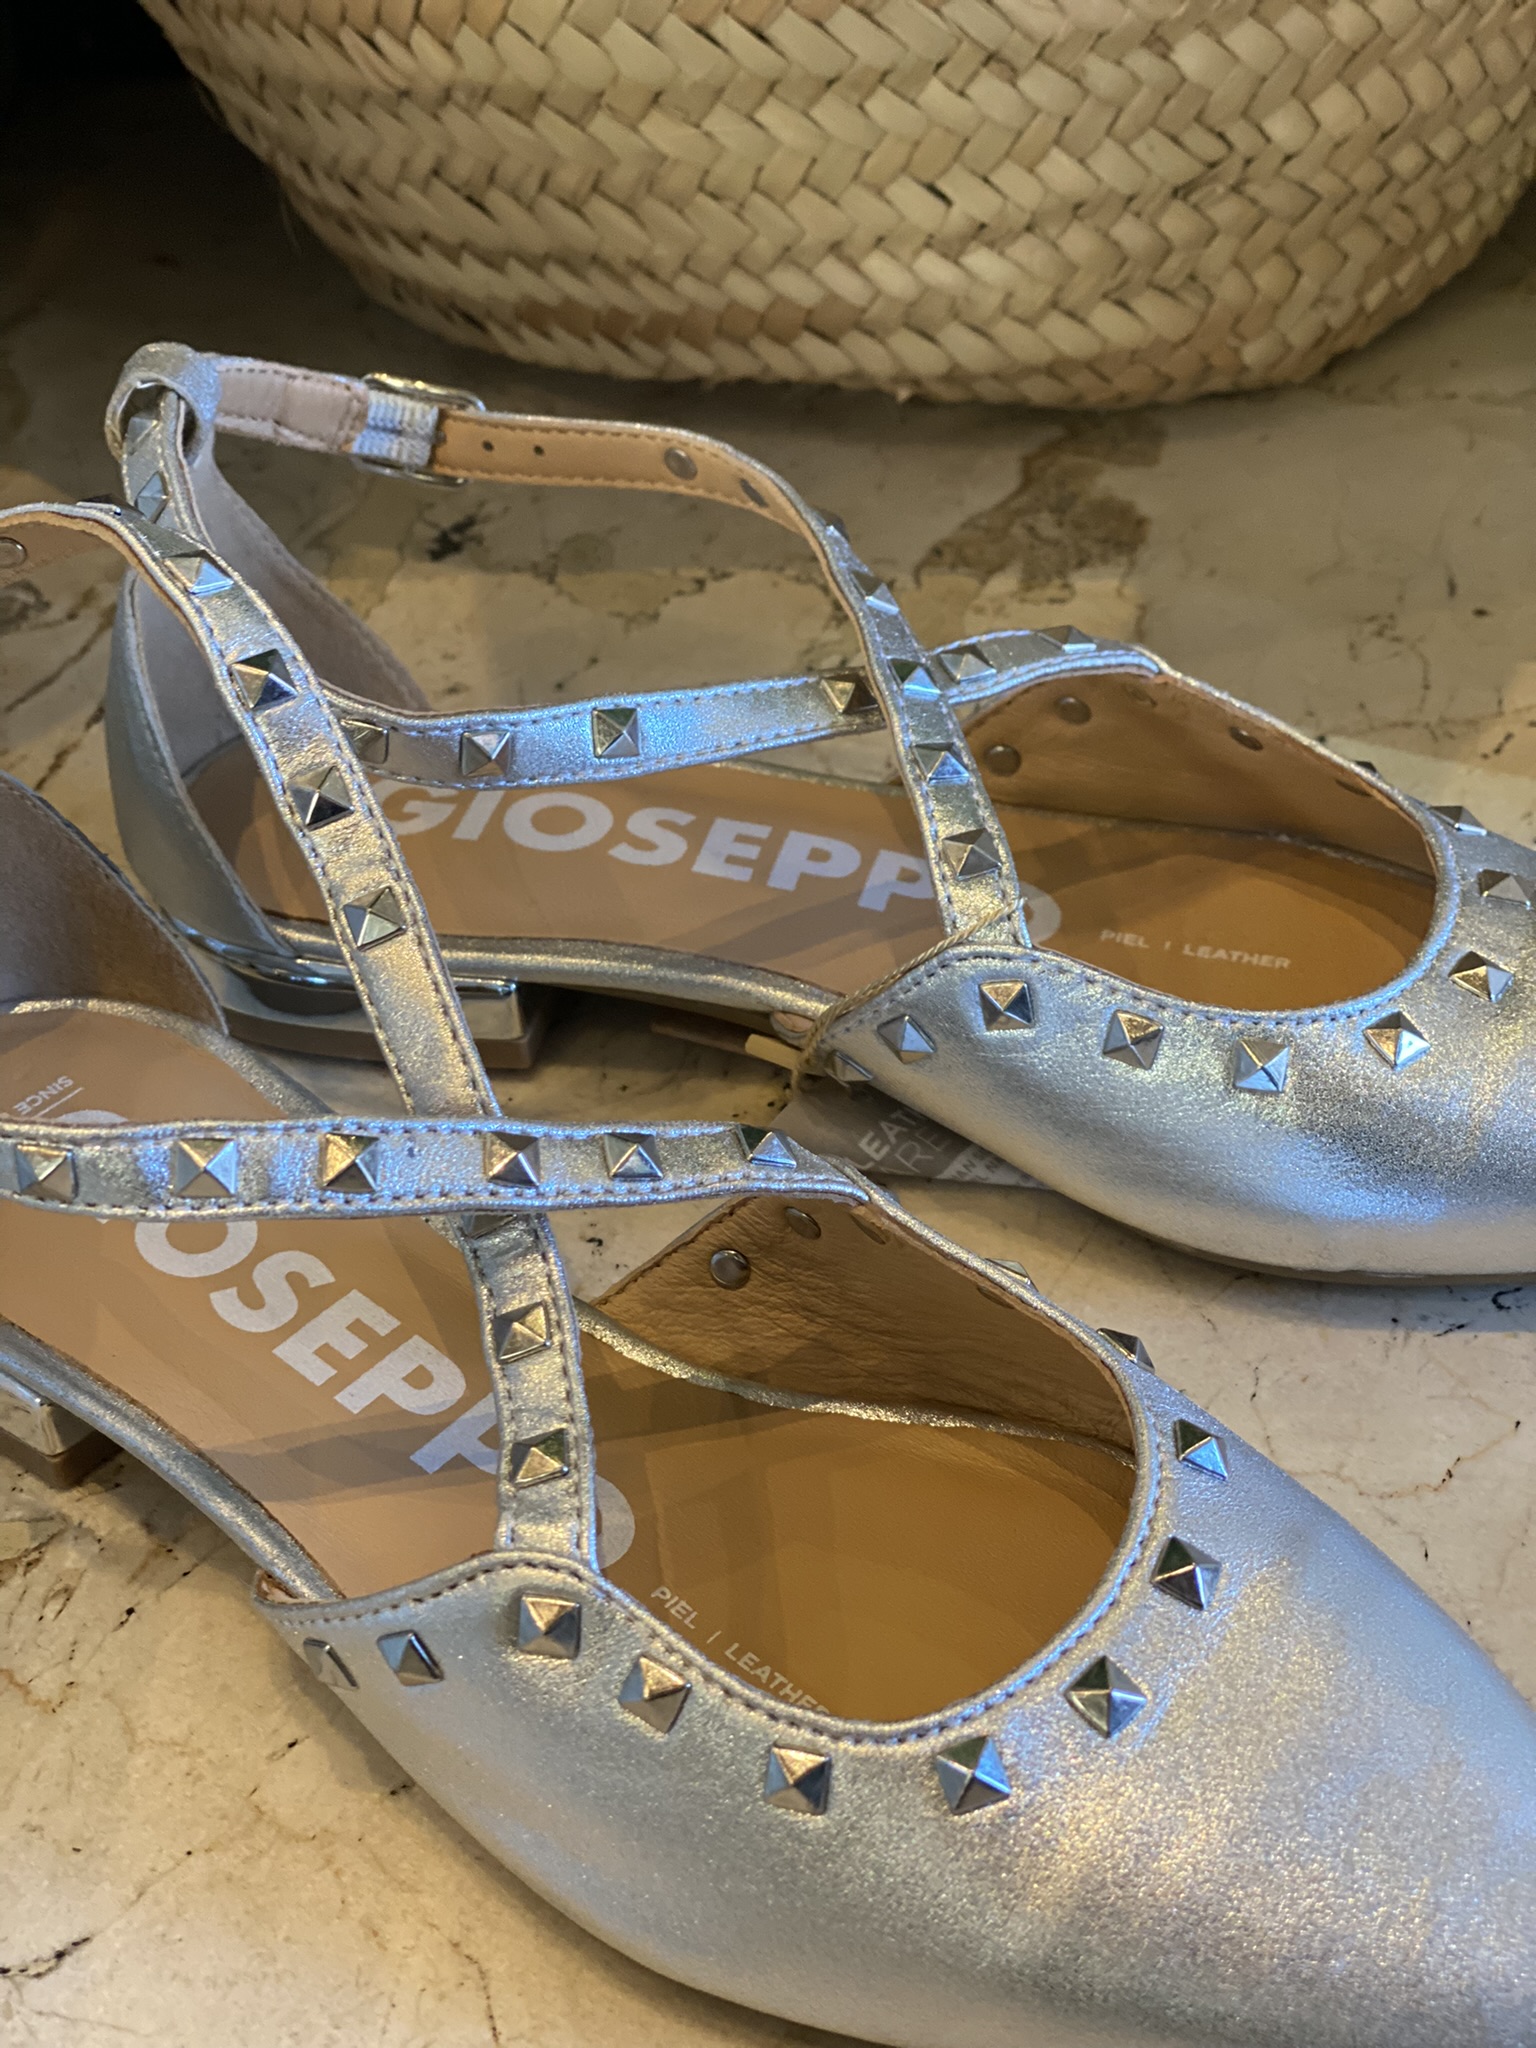 Zapato modelo Garcon de Gioseppo en piel metalizada color plata con tachuelas.